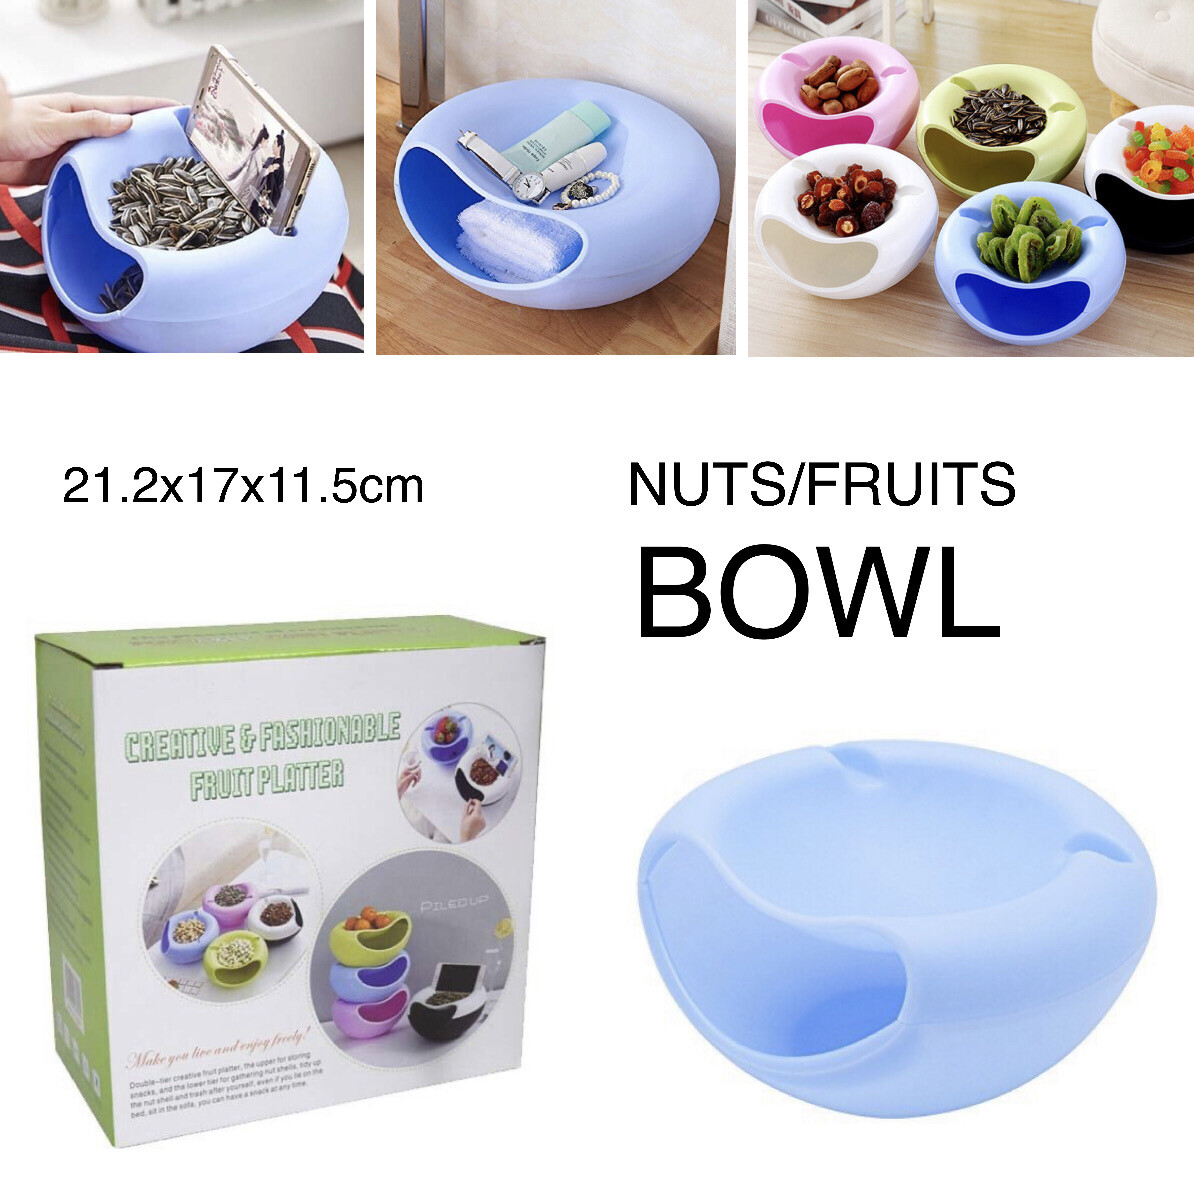 Nuts/Fruits Bowl